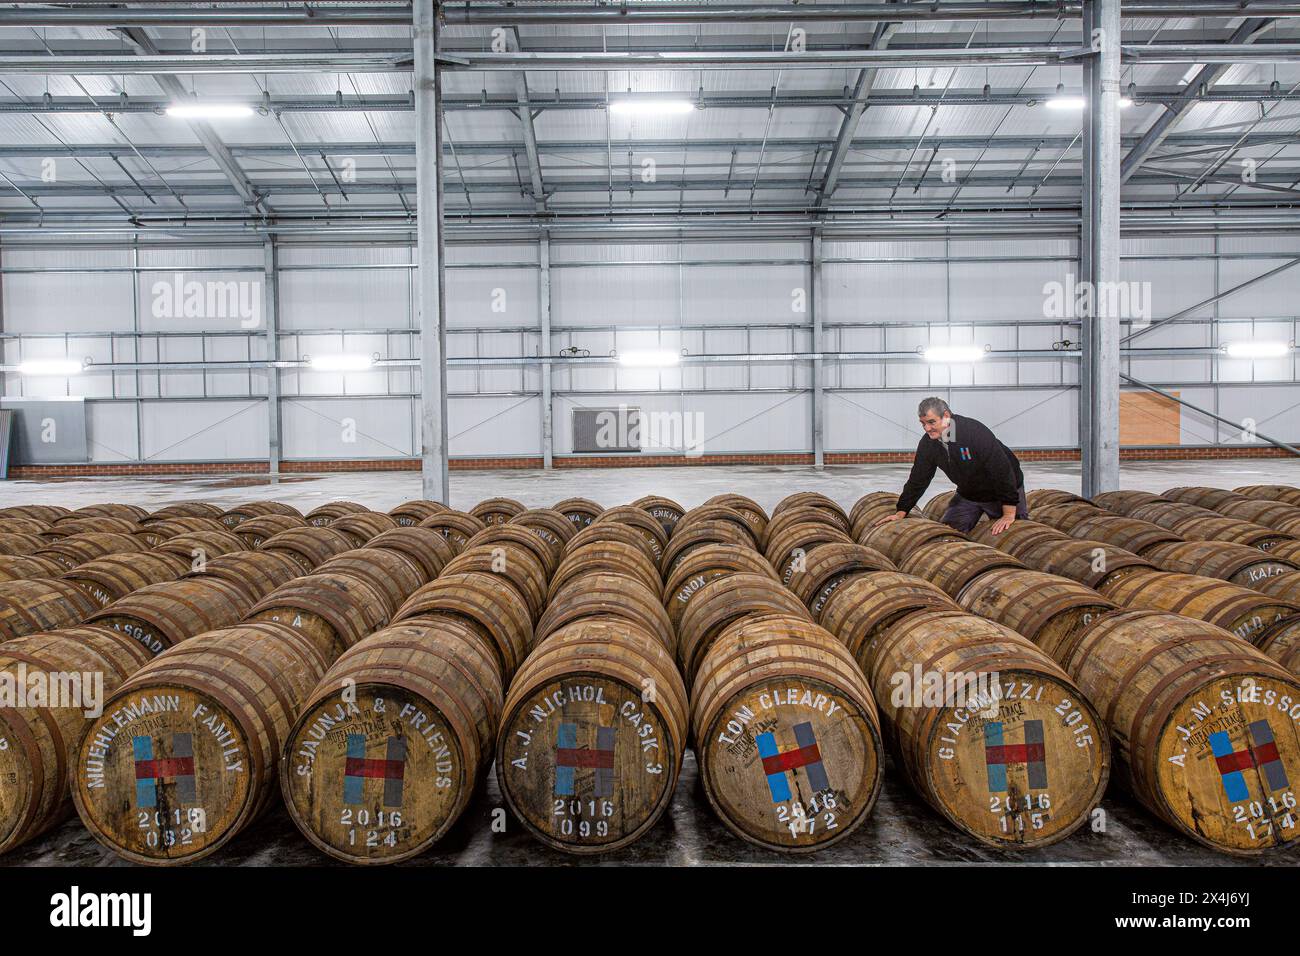 Isle of Harris whisky barrels in warehouse Stock Photo